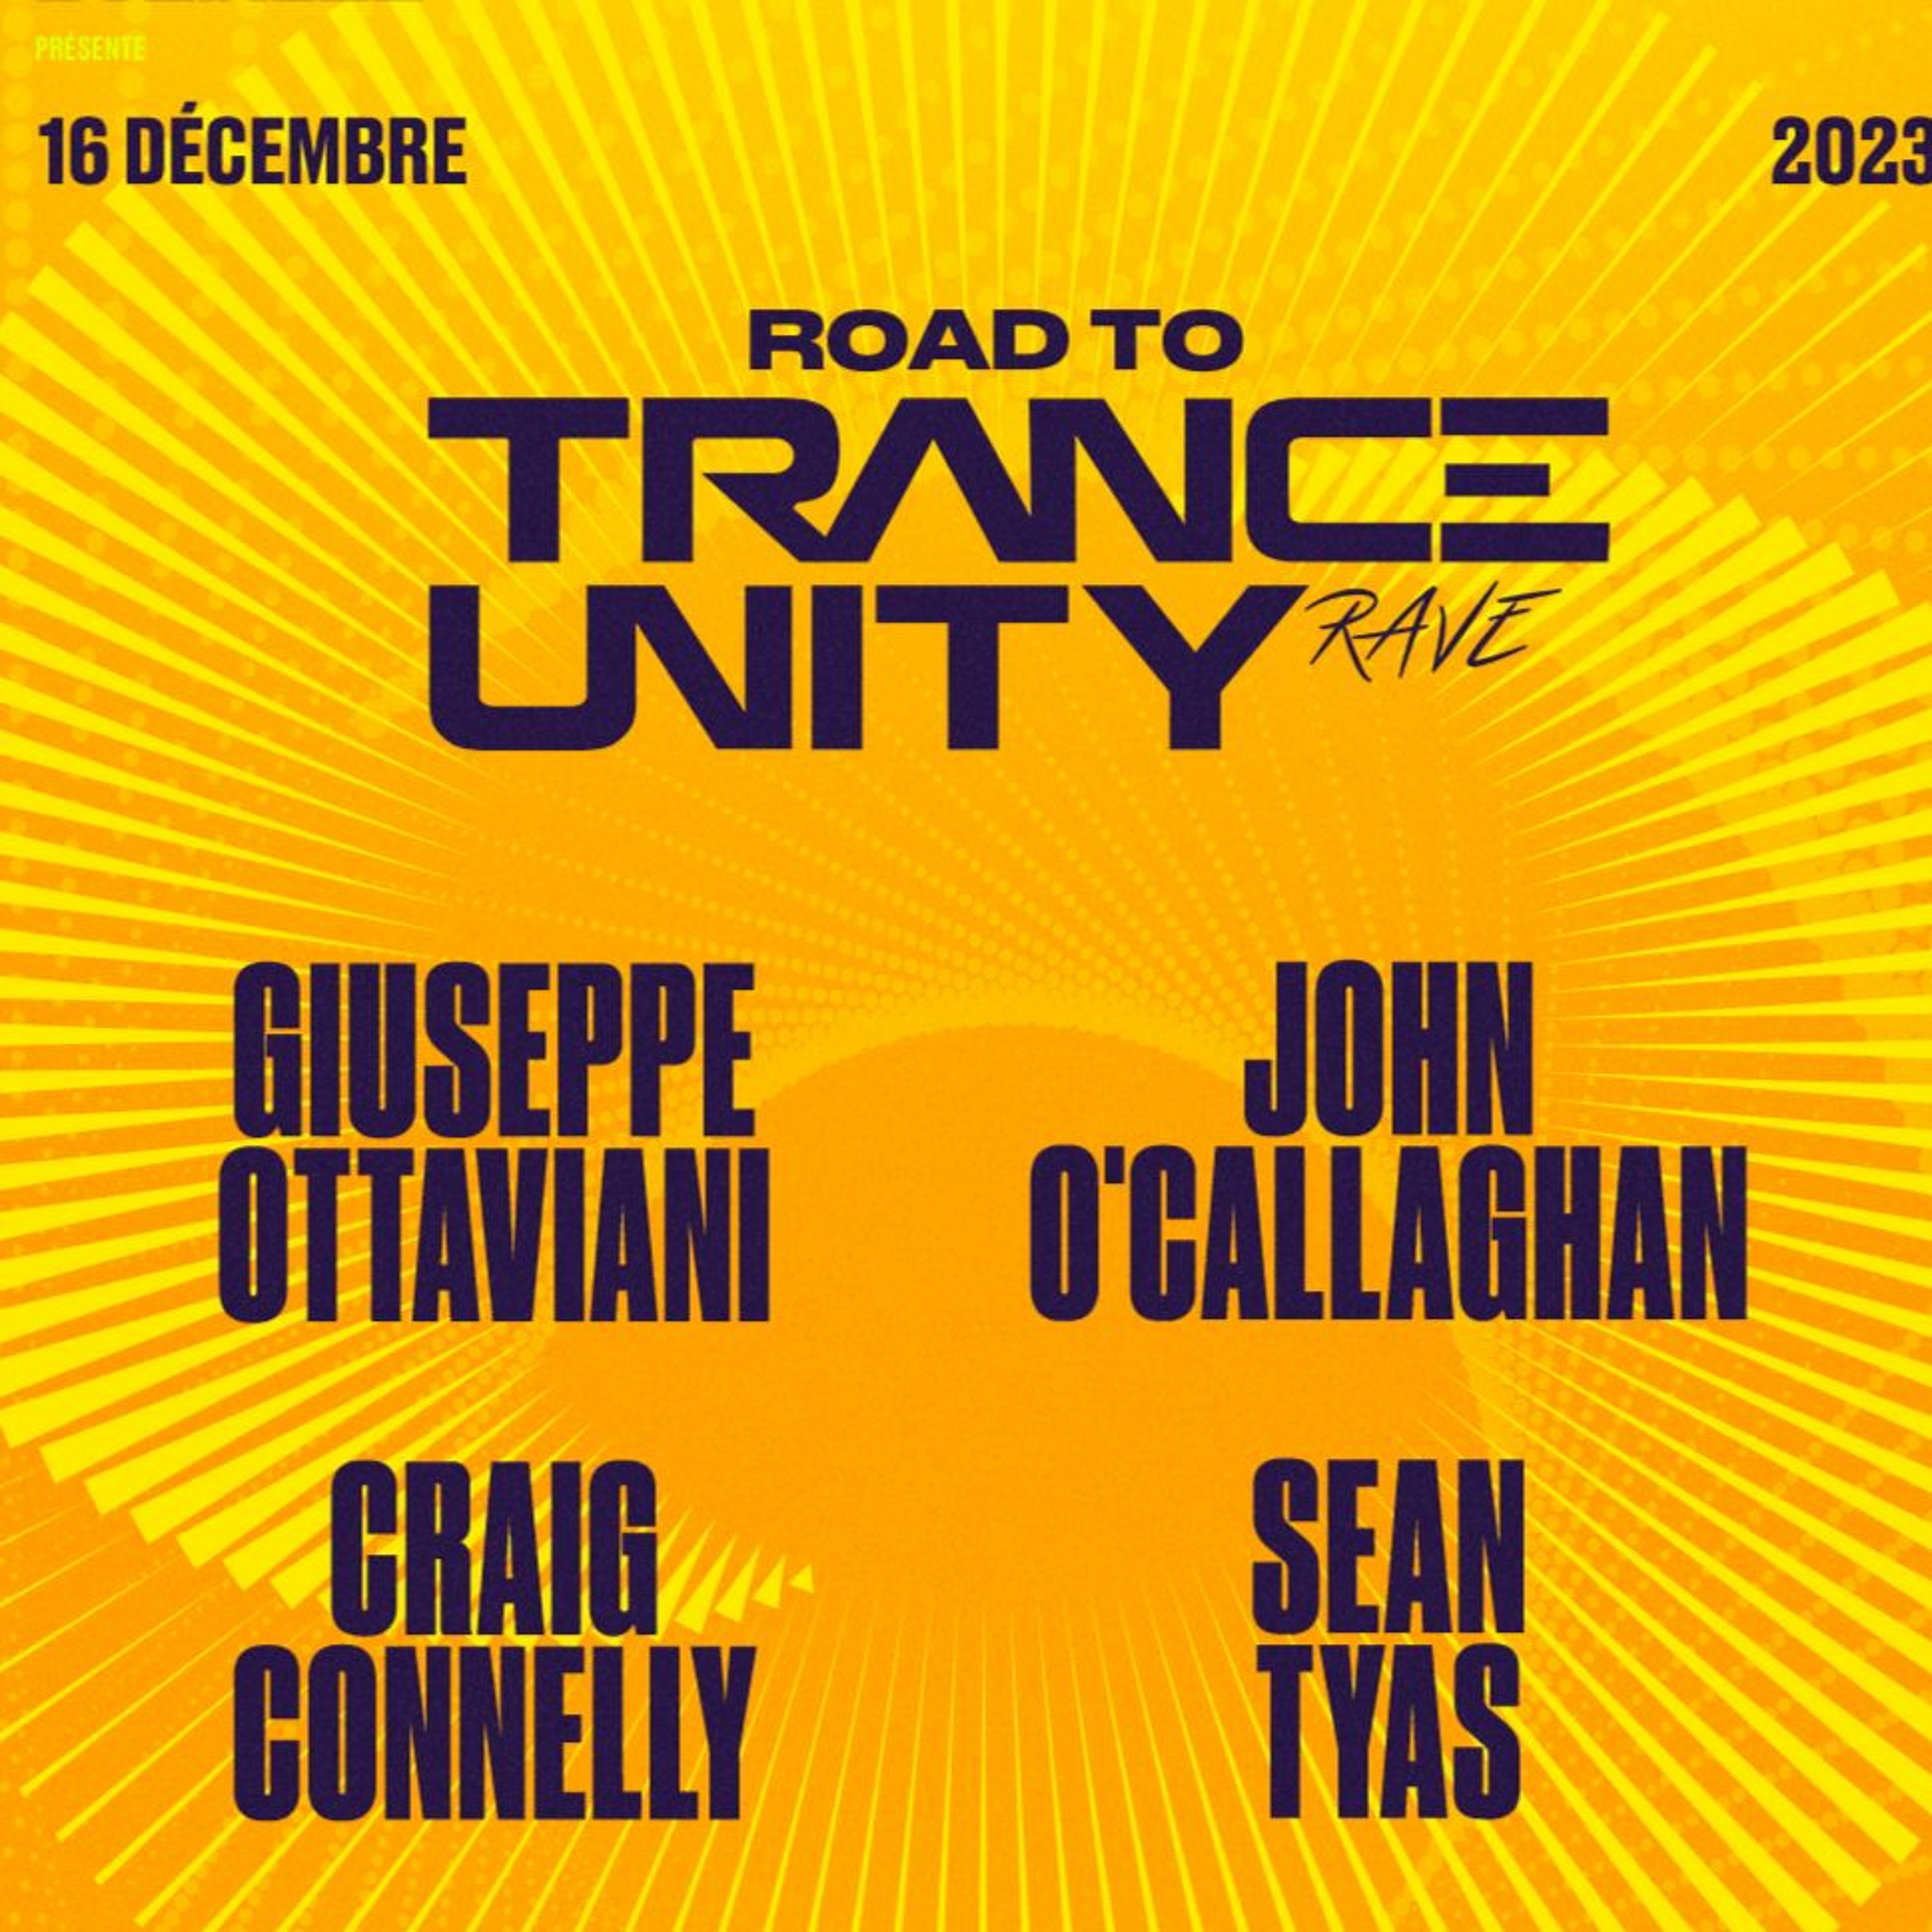 John O'Callaghan LIVE @ Trance Unity Rave, Montreal